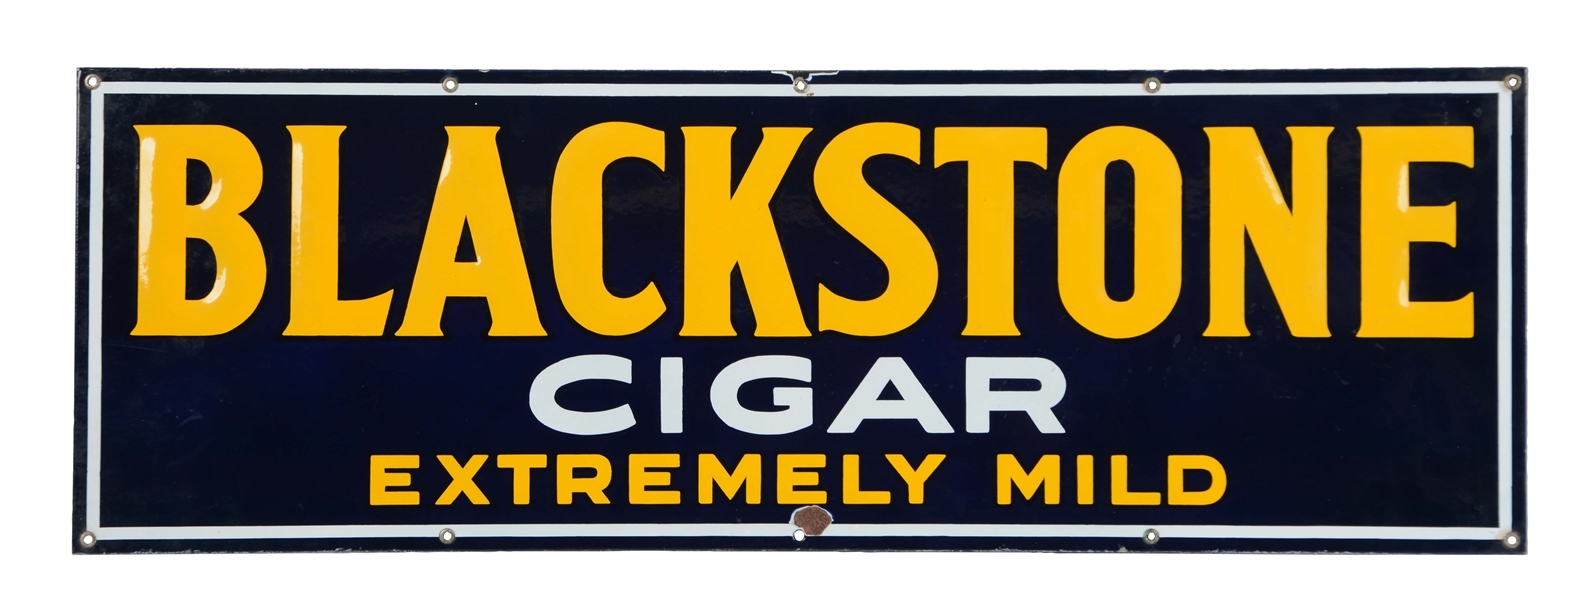 EMBOSSED PORCELAIN BLACKSTONE CIGAR ADVERTISING SIGN. 